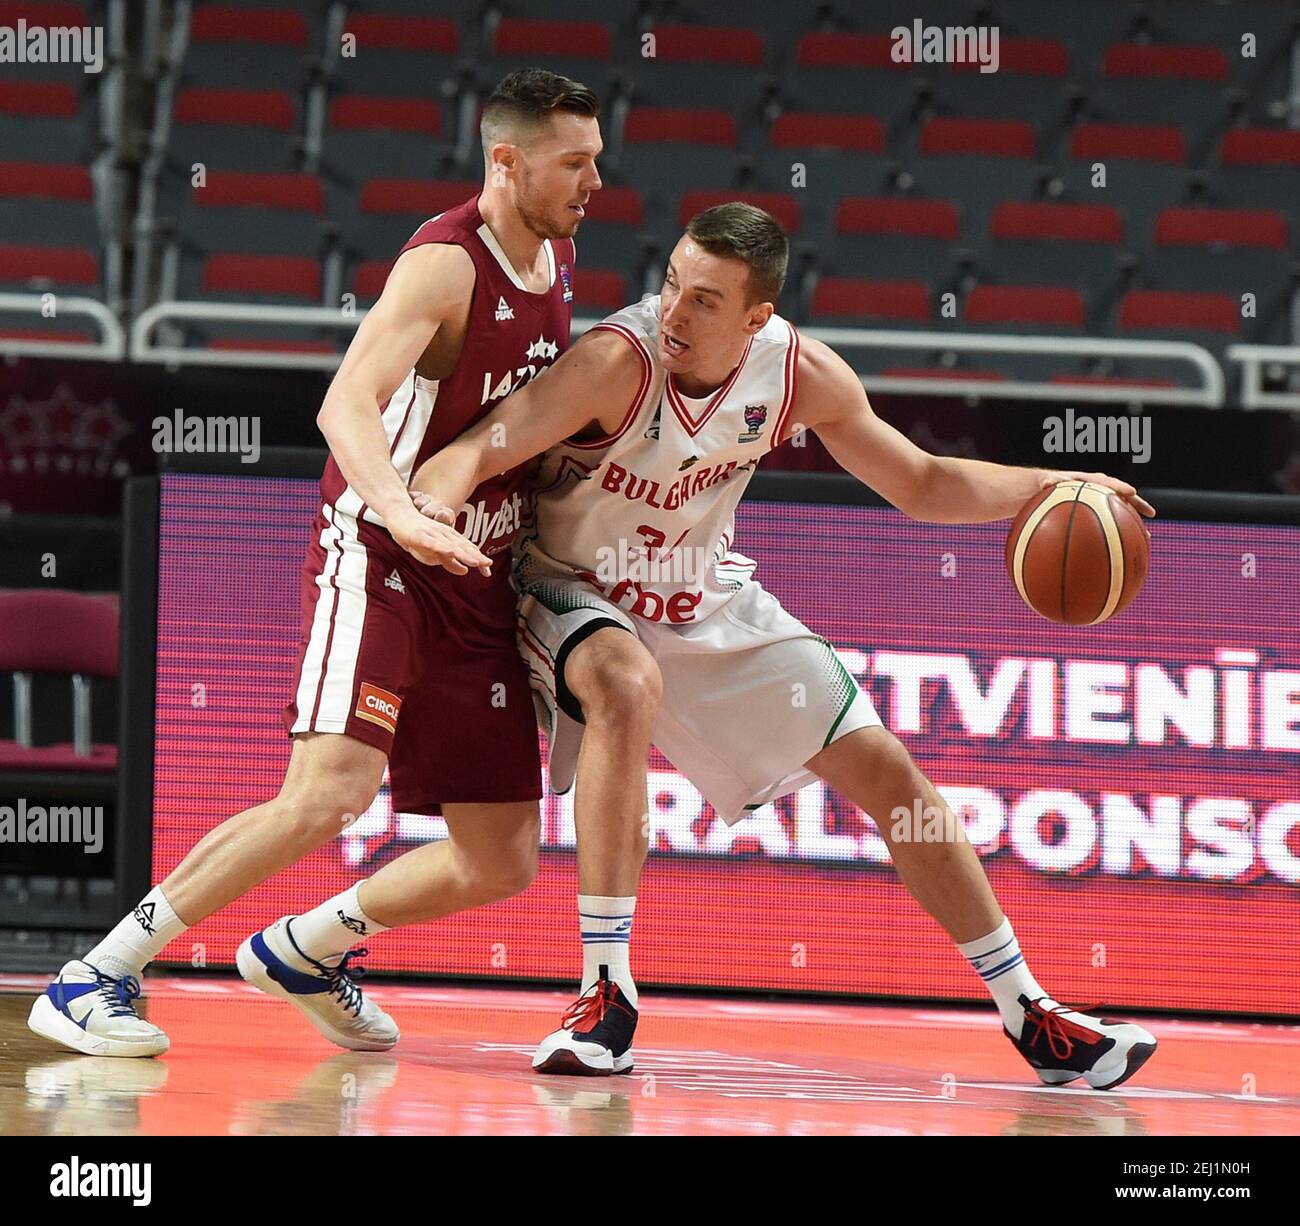 Riga, Latvia. 20th Feb, 2021. Dairis Bertans (L) of Latvia defends Dimitar Atanasov Dimitrov of Bulgaria during their FIBA EuroBasket 2022 qualifying basketball match in Riga, Latvia, Feb